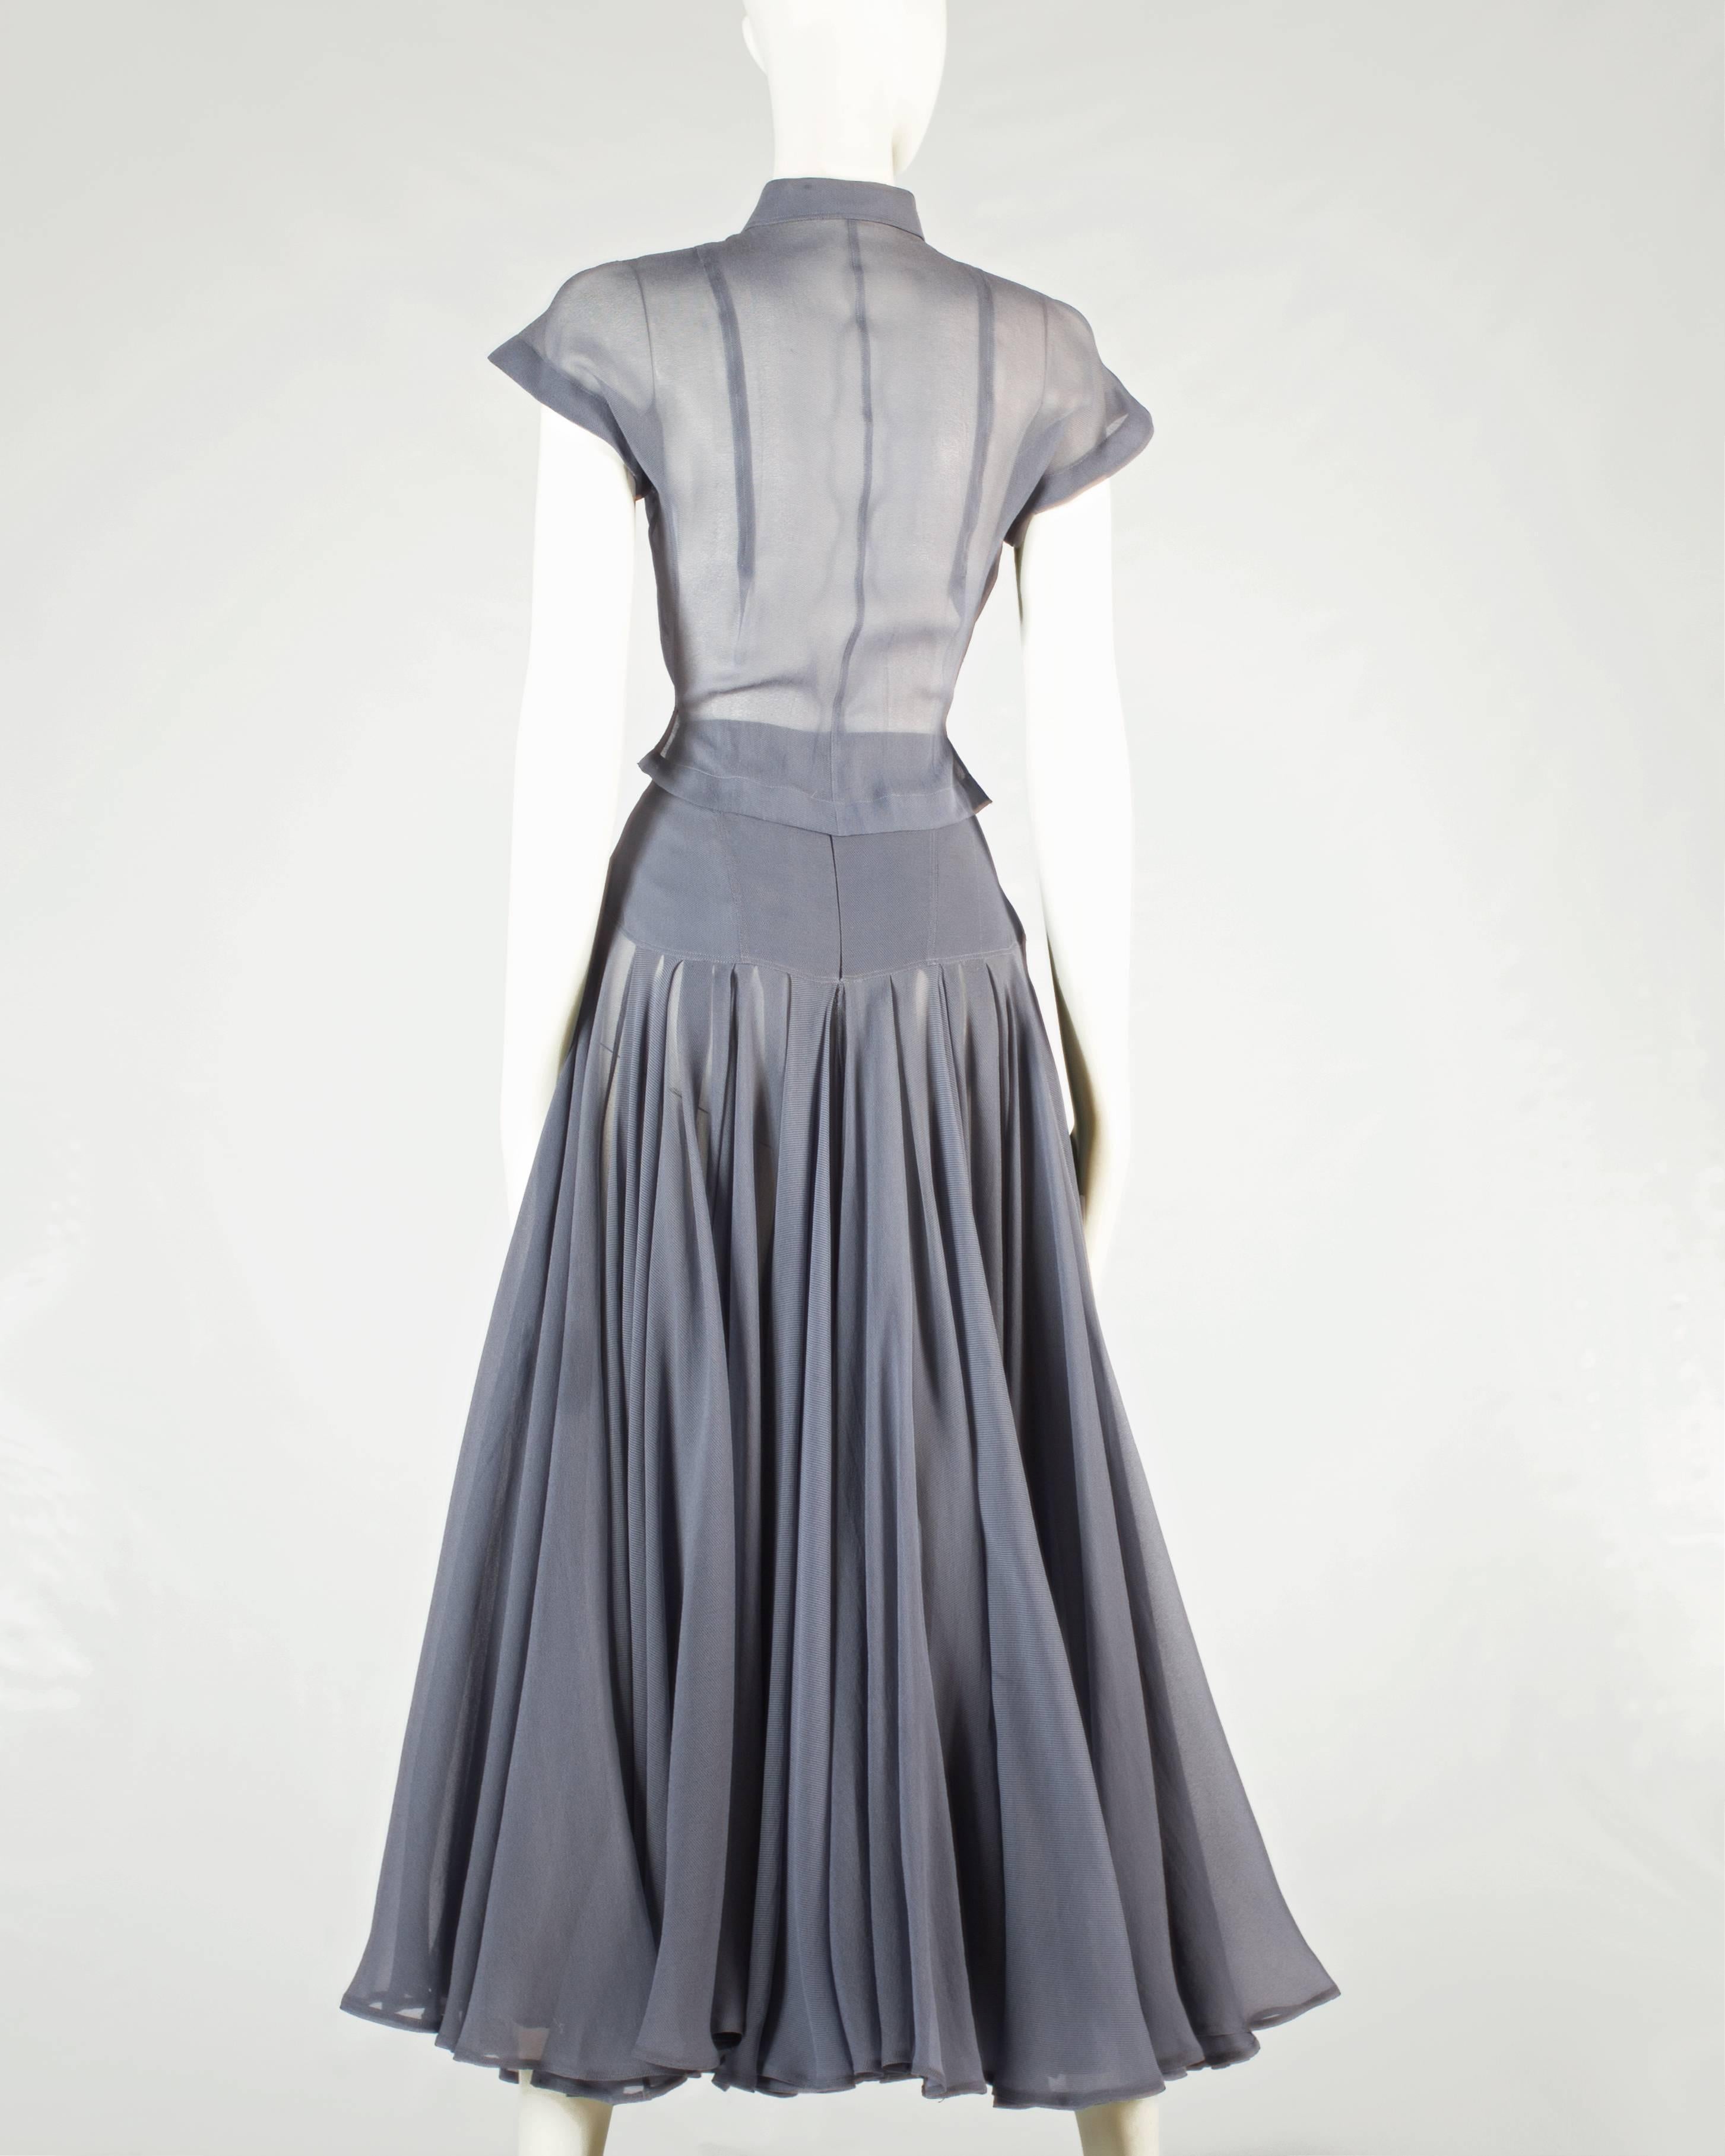 Gray Azzedine Alaia powder blue organza circle skirt and blouse ensemble, ss 1990